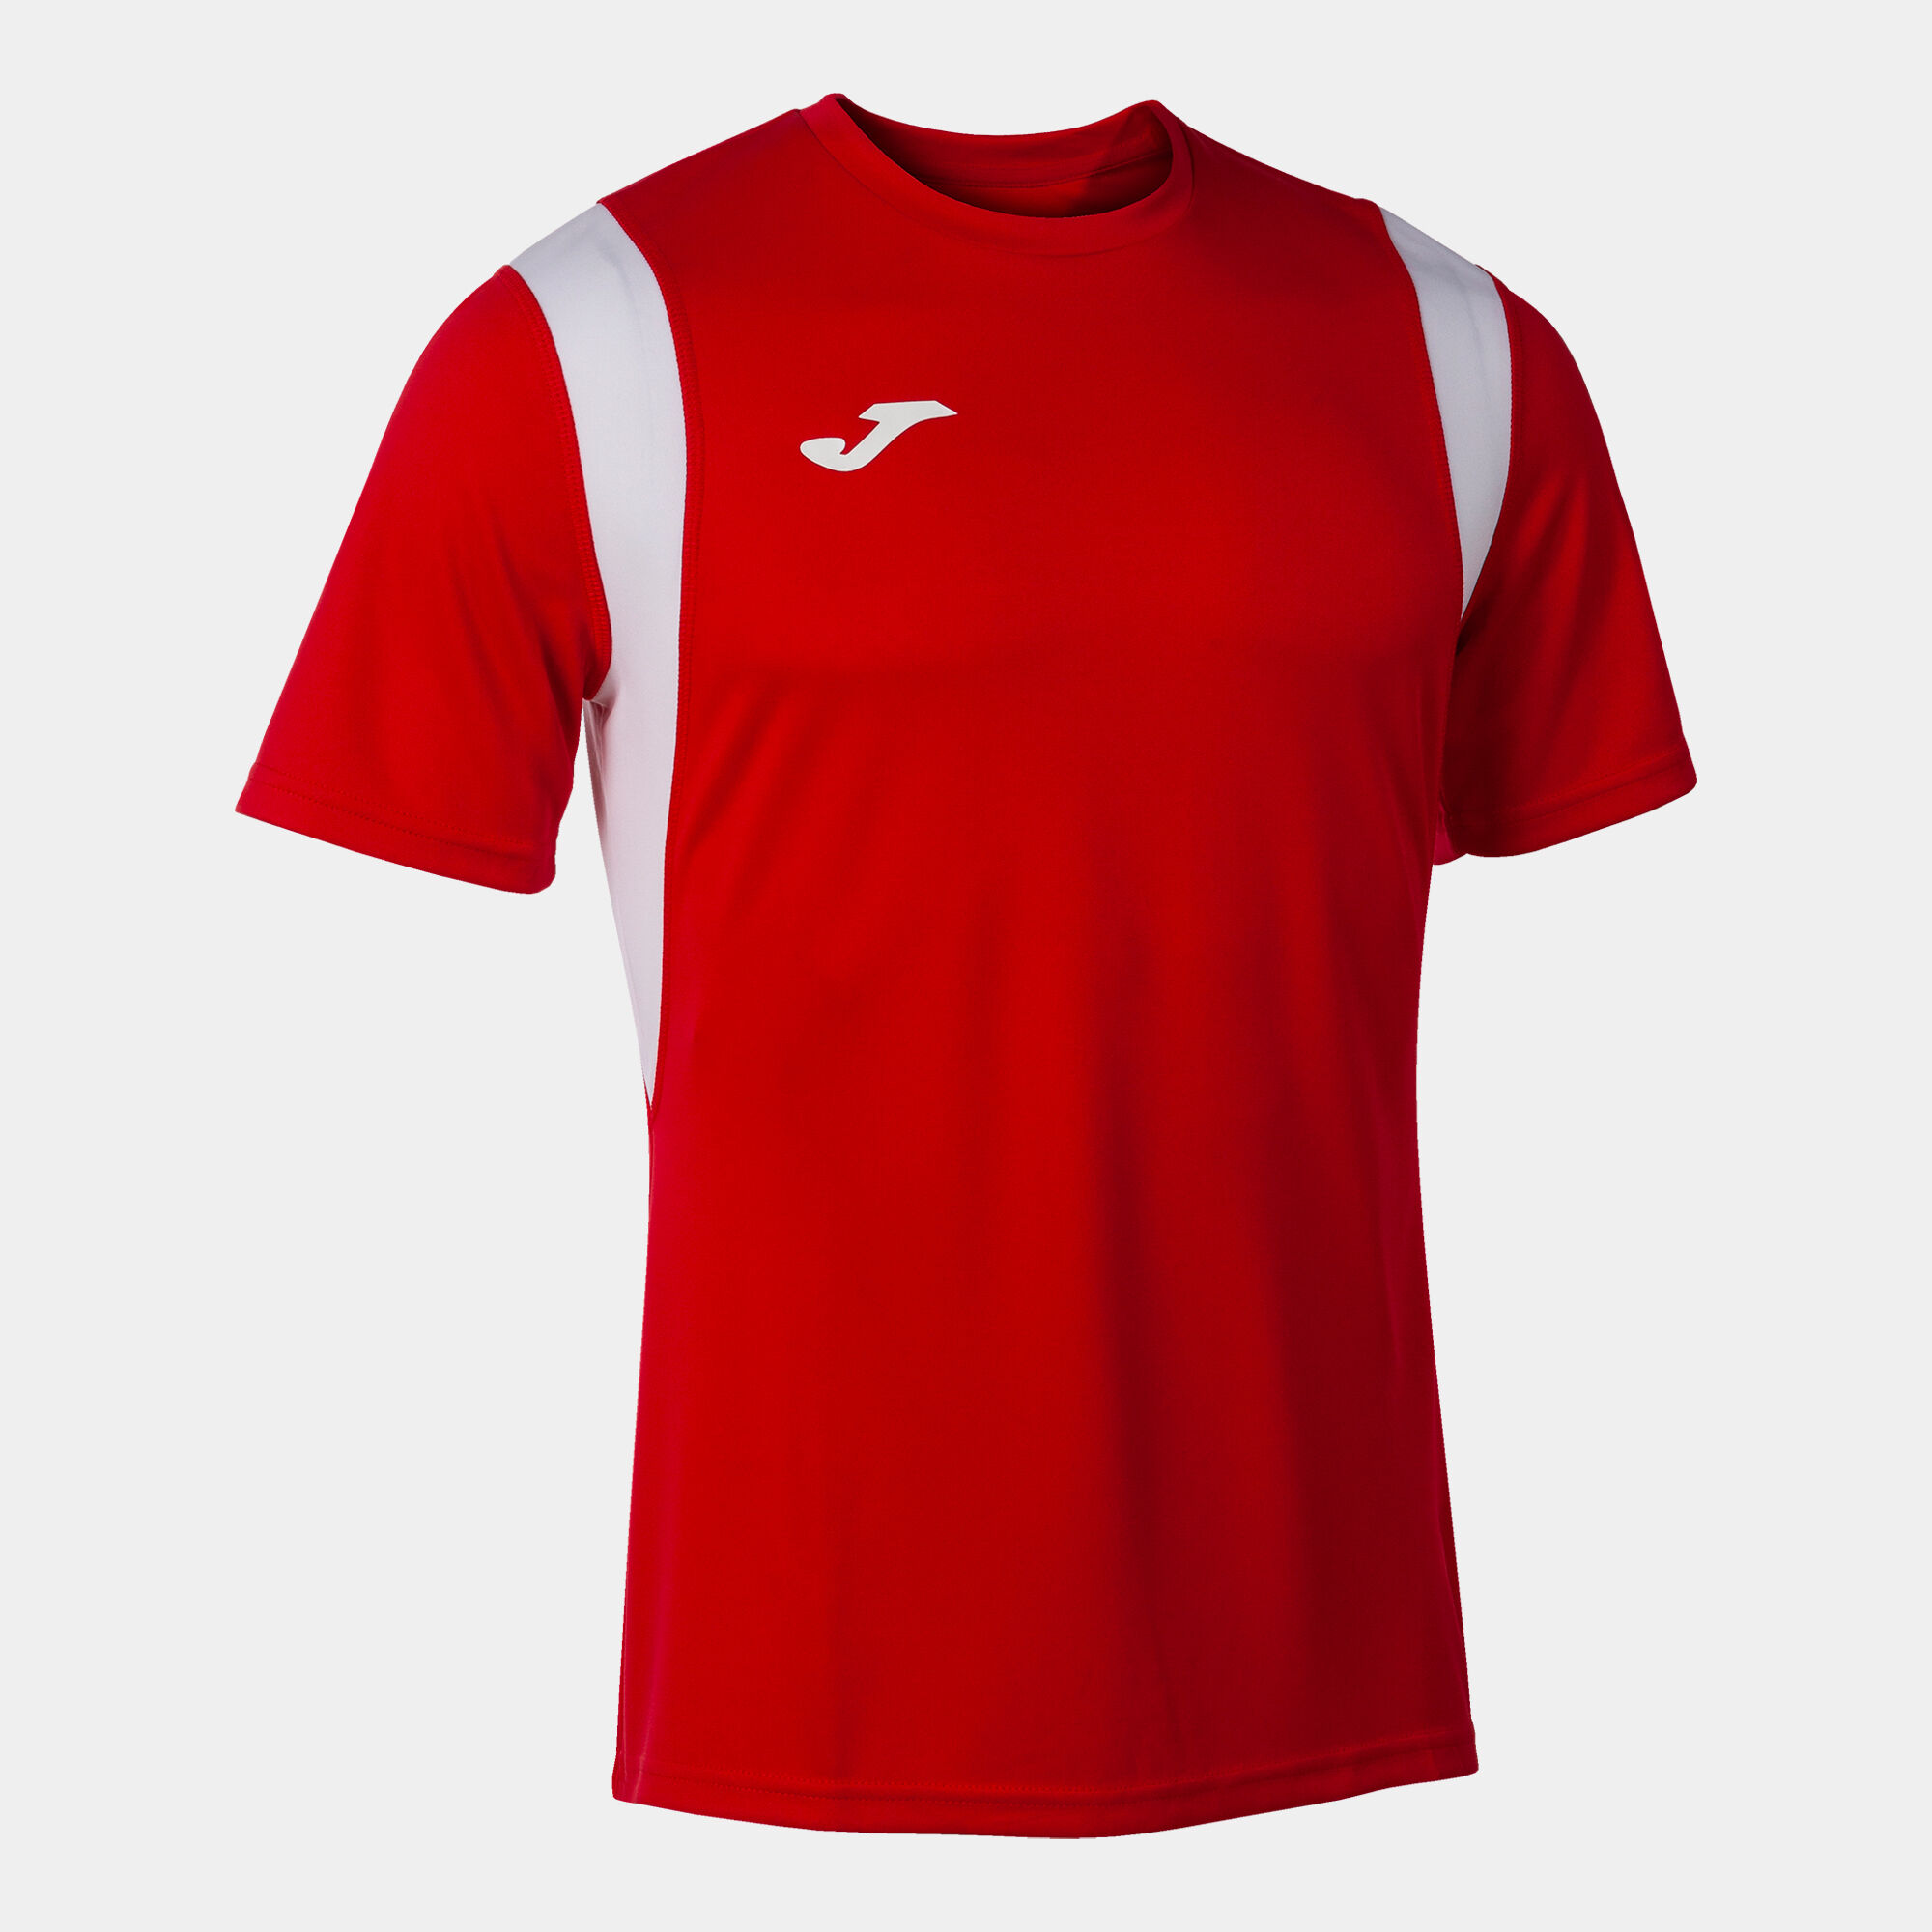 Camiseta manga corta hombre Dinamo rojo